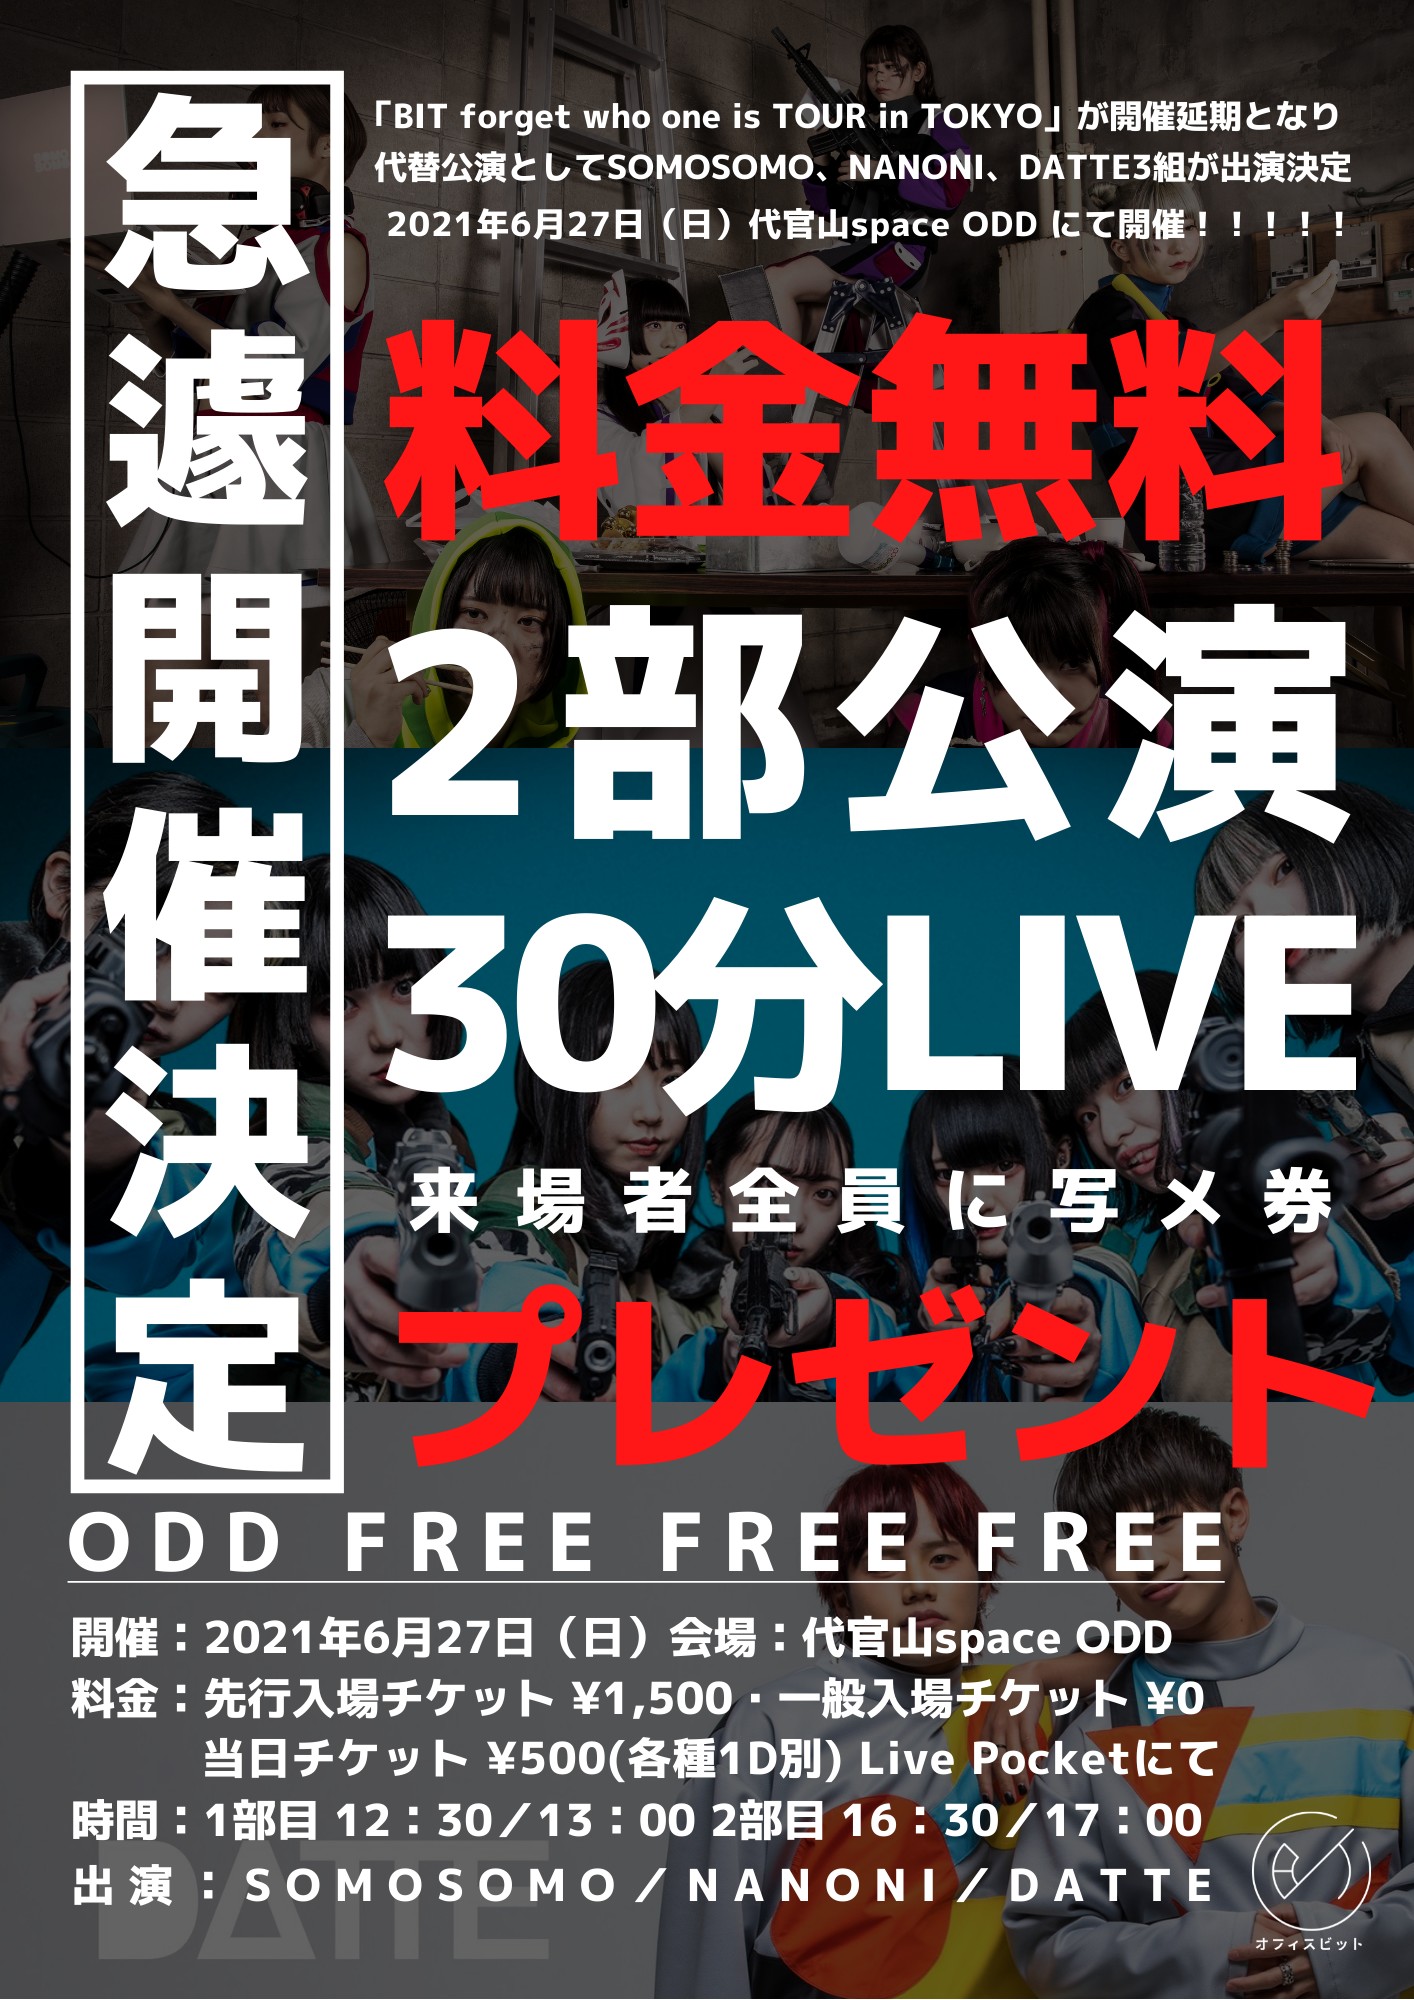 ODD FREE FREE FREE 【2部目】